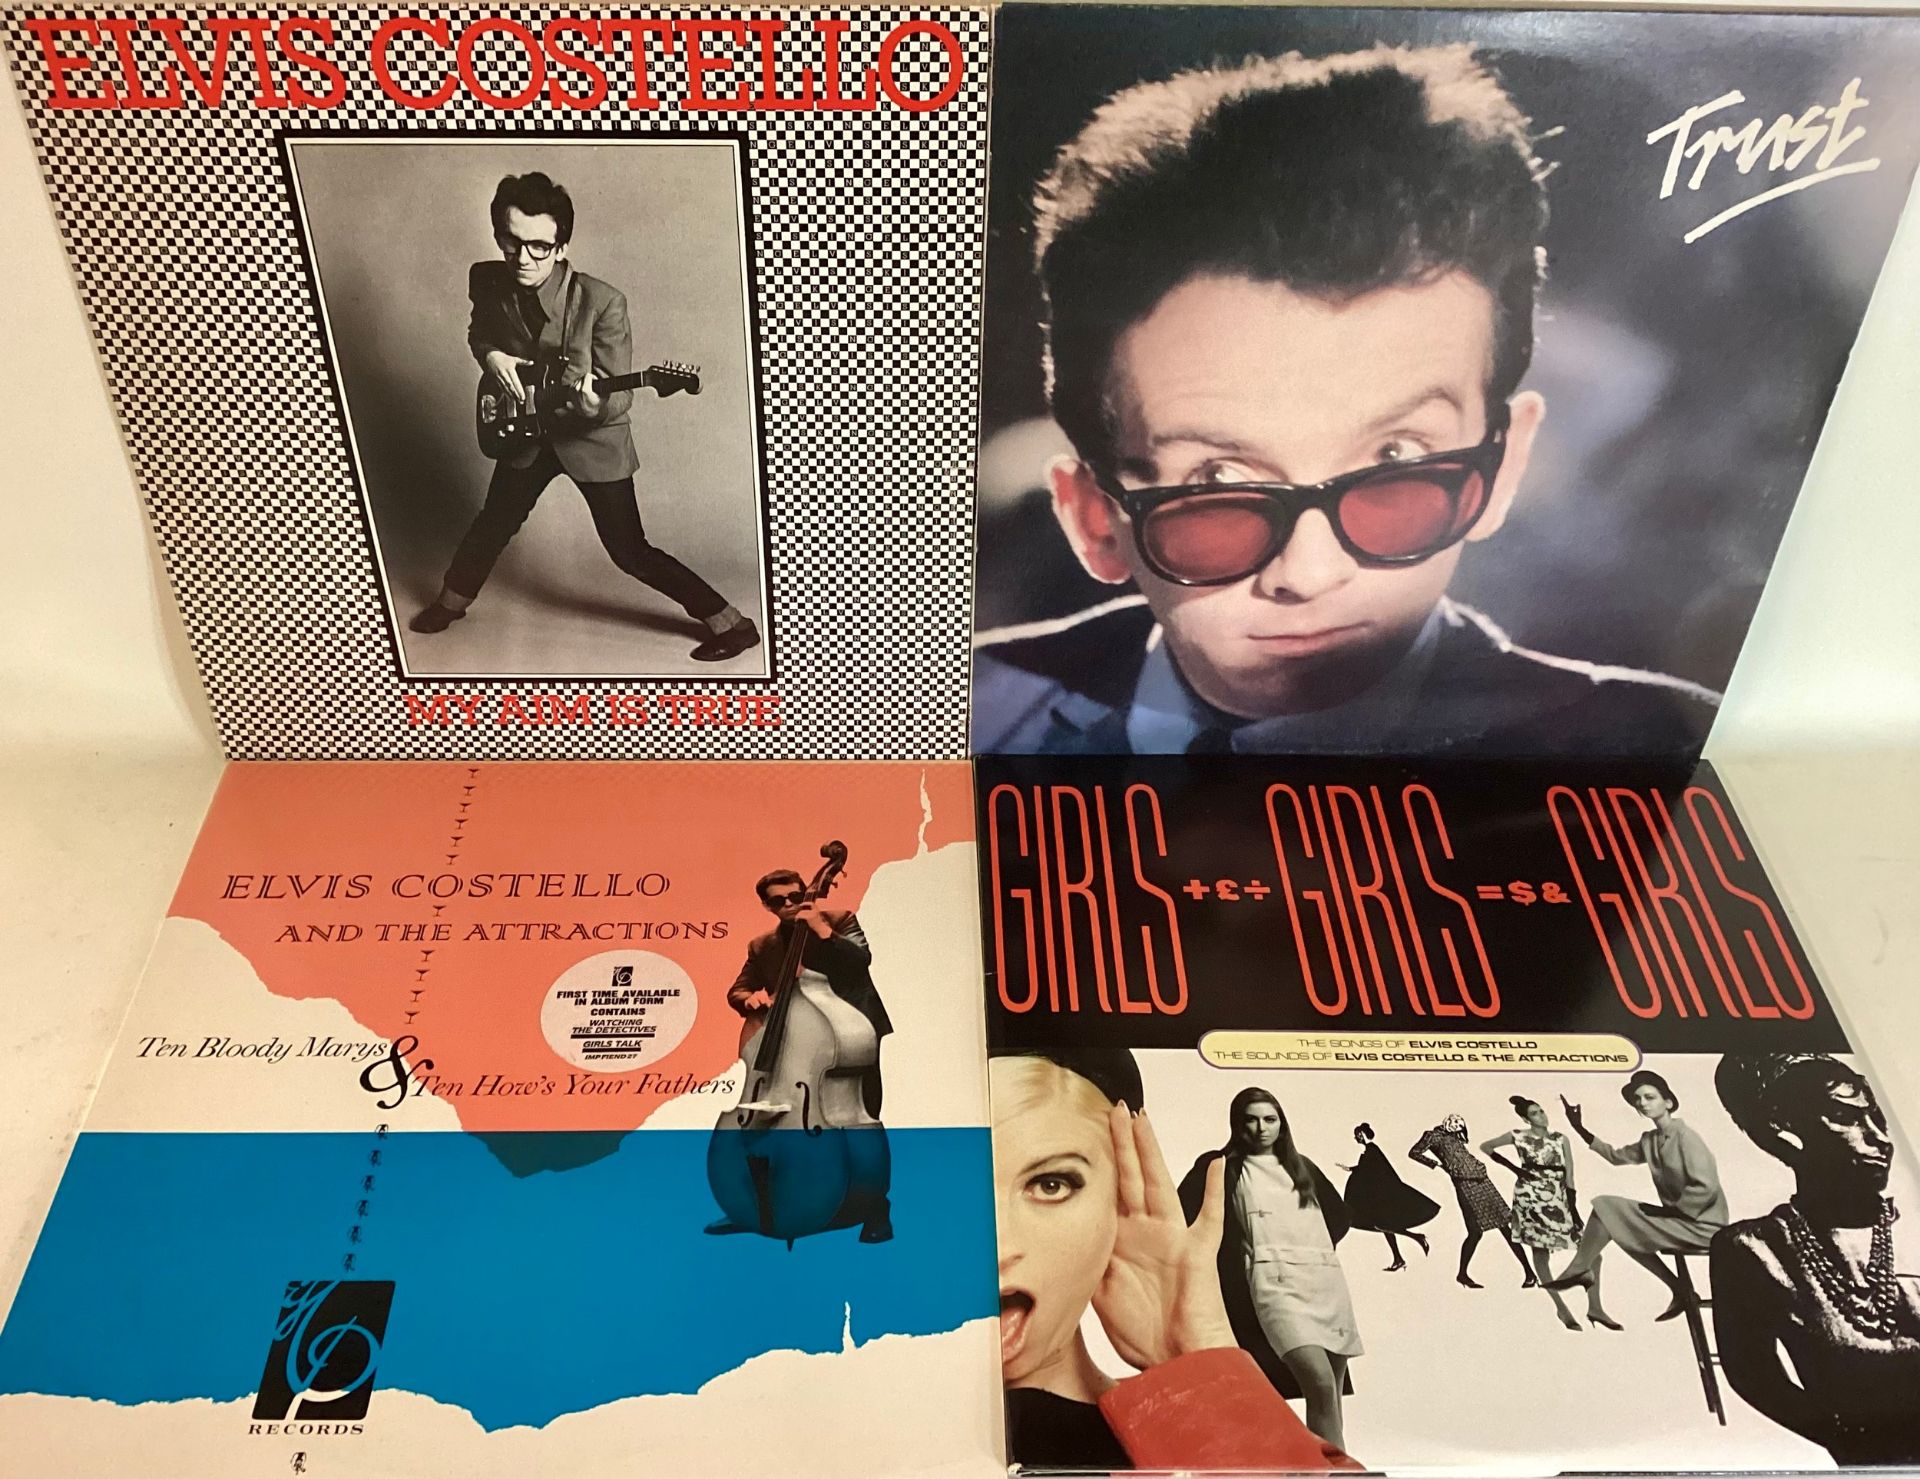 VARIOUS ELVIS COSTELLO VINYL LP RECORDS X 4. Copies found here of - Trust - Girls + £ + Girls - My